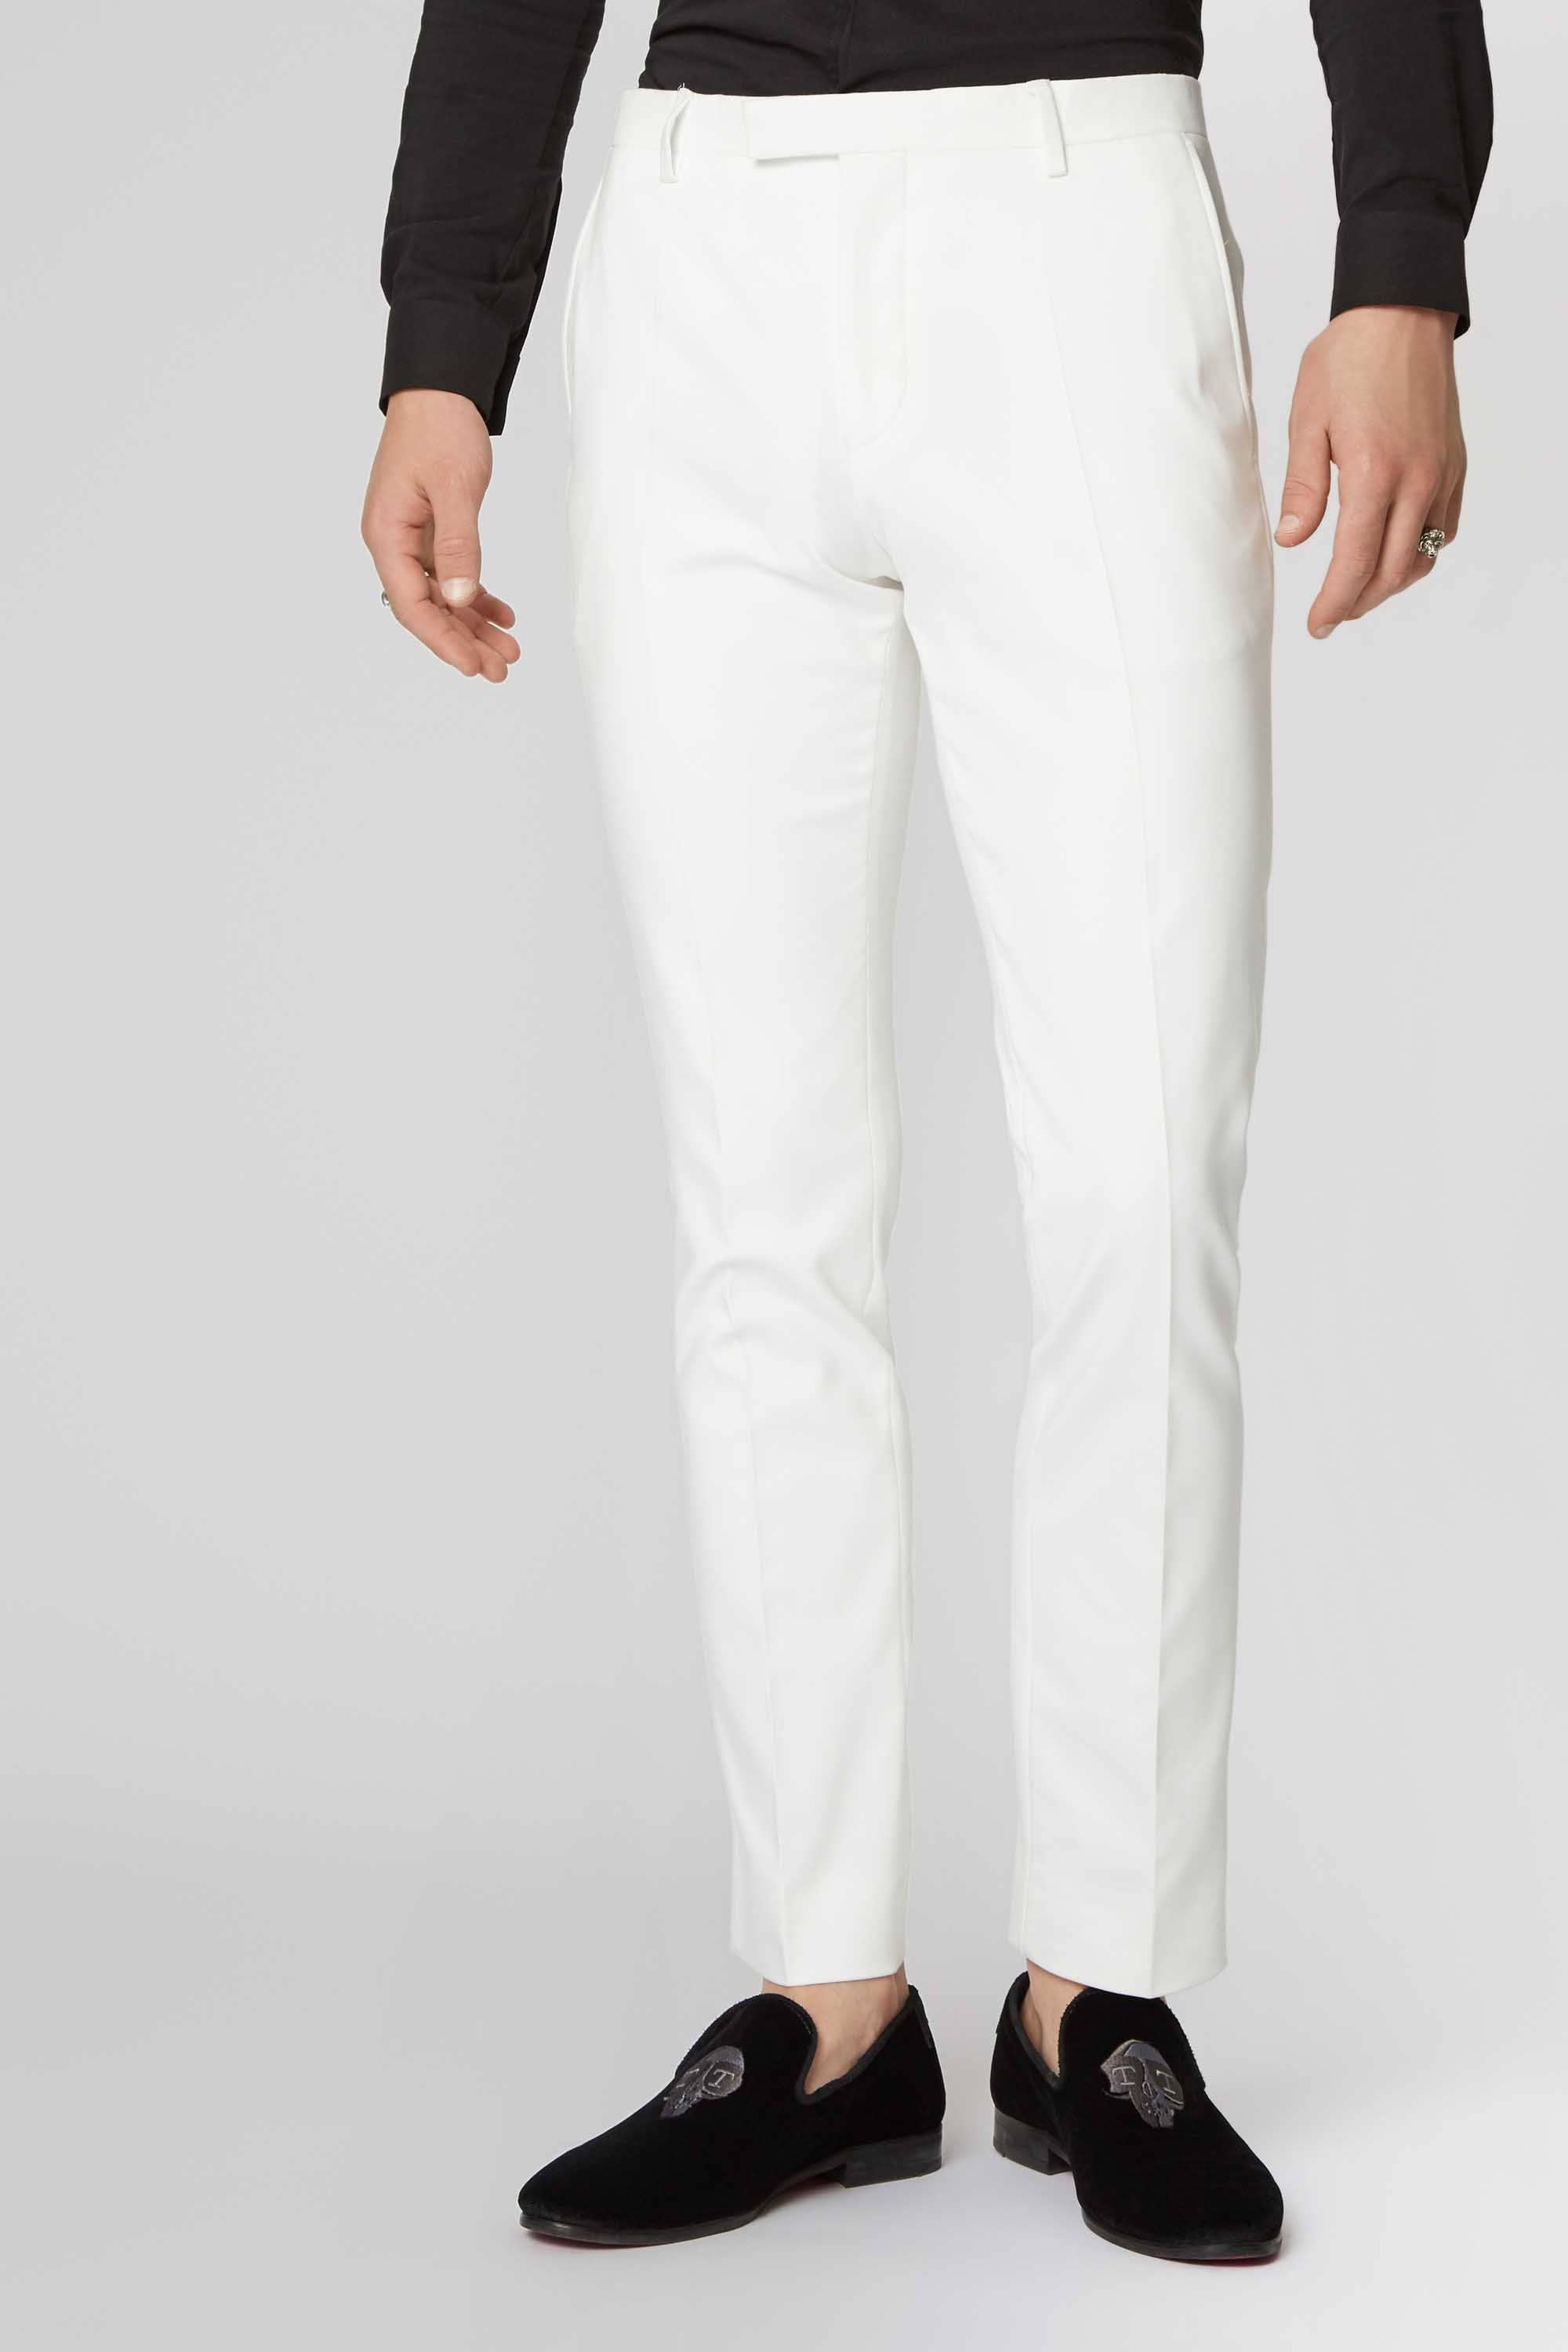 white tuxedo pants womens